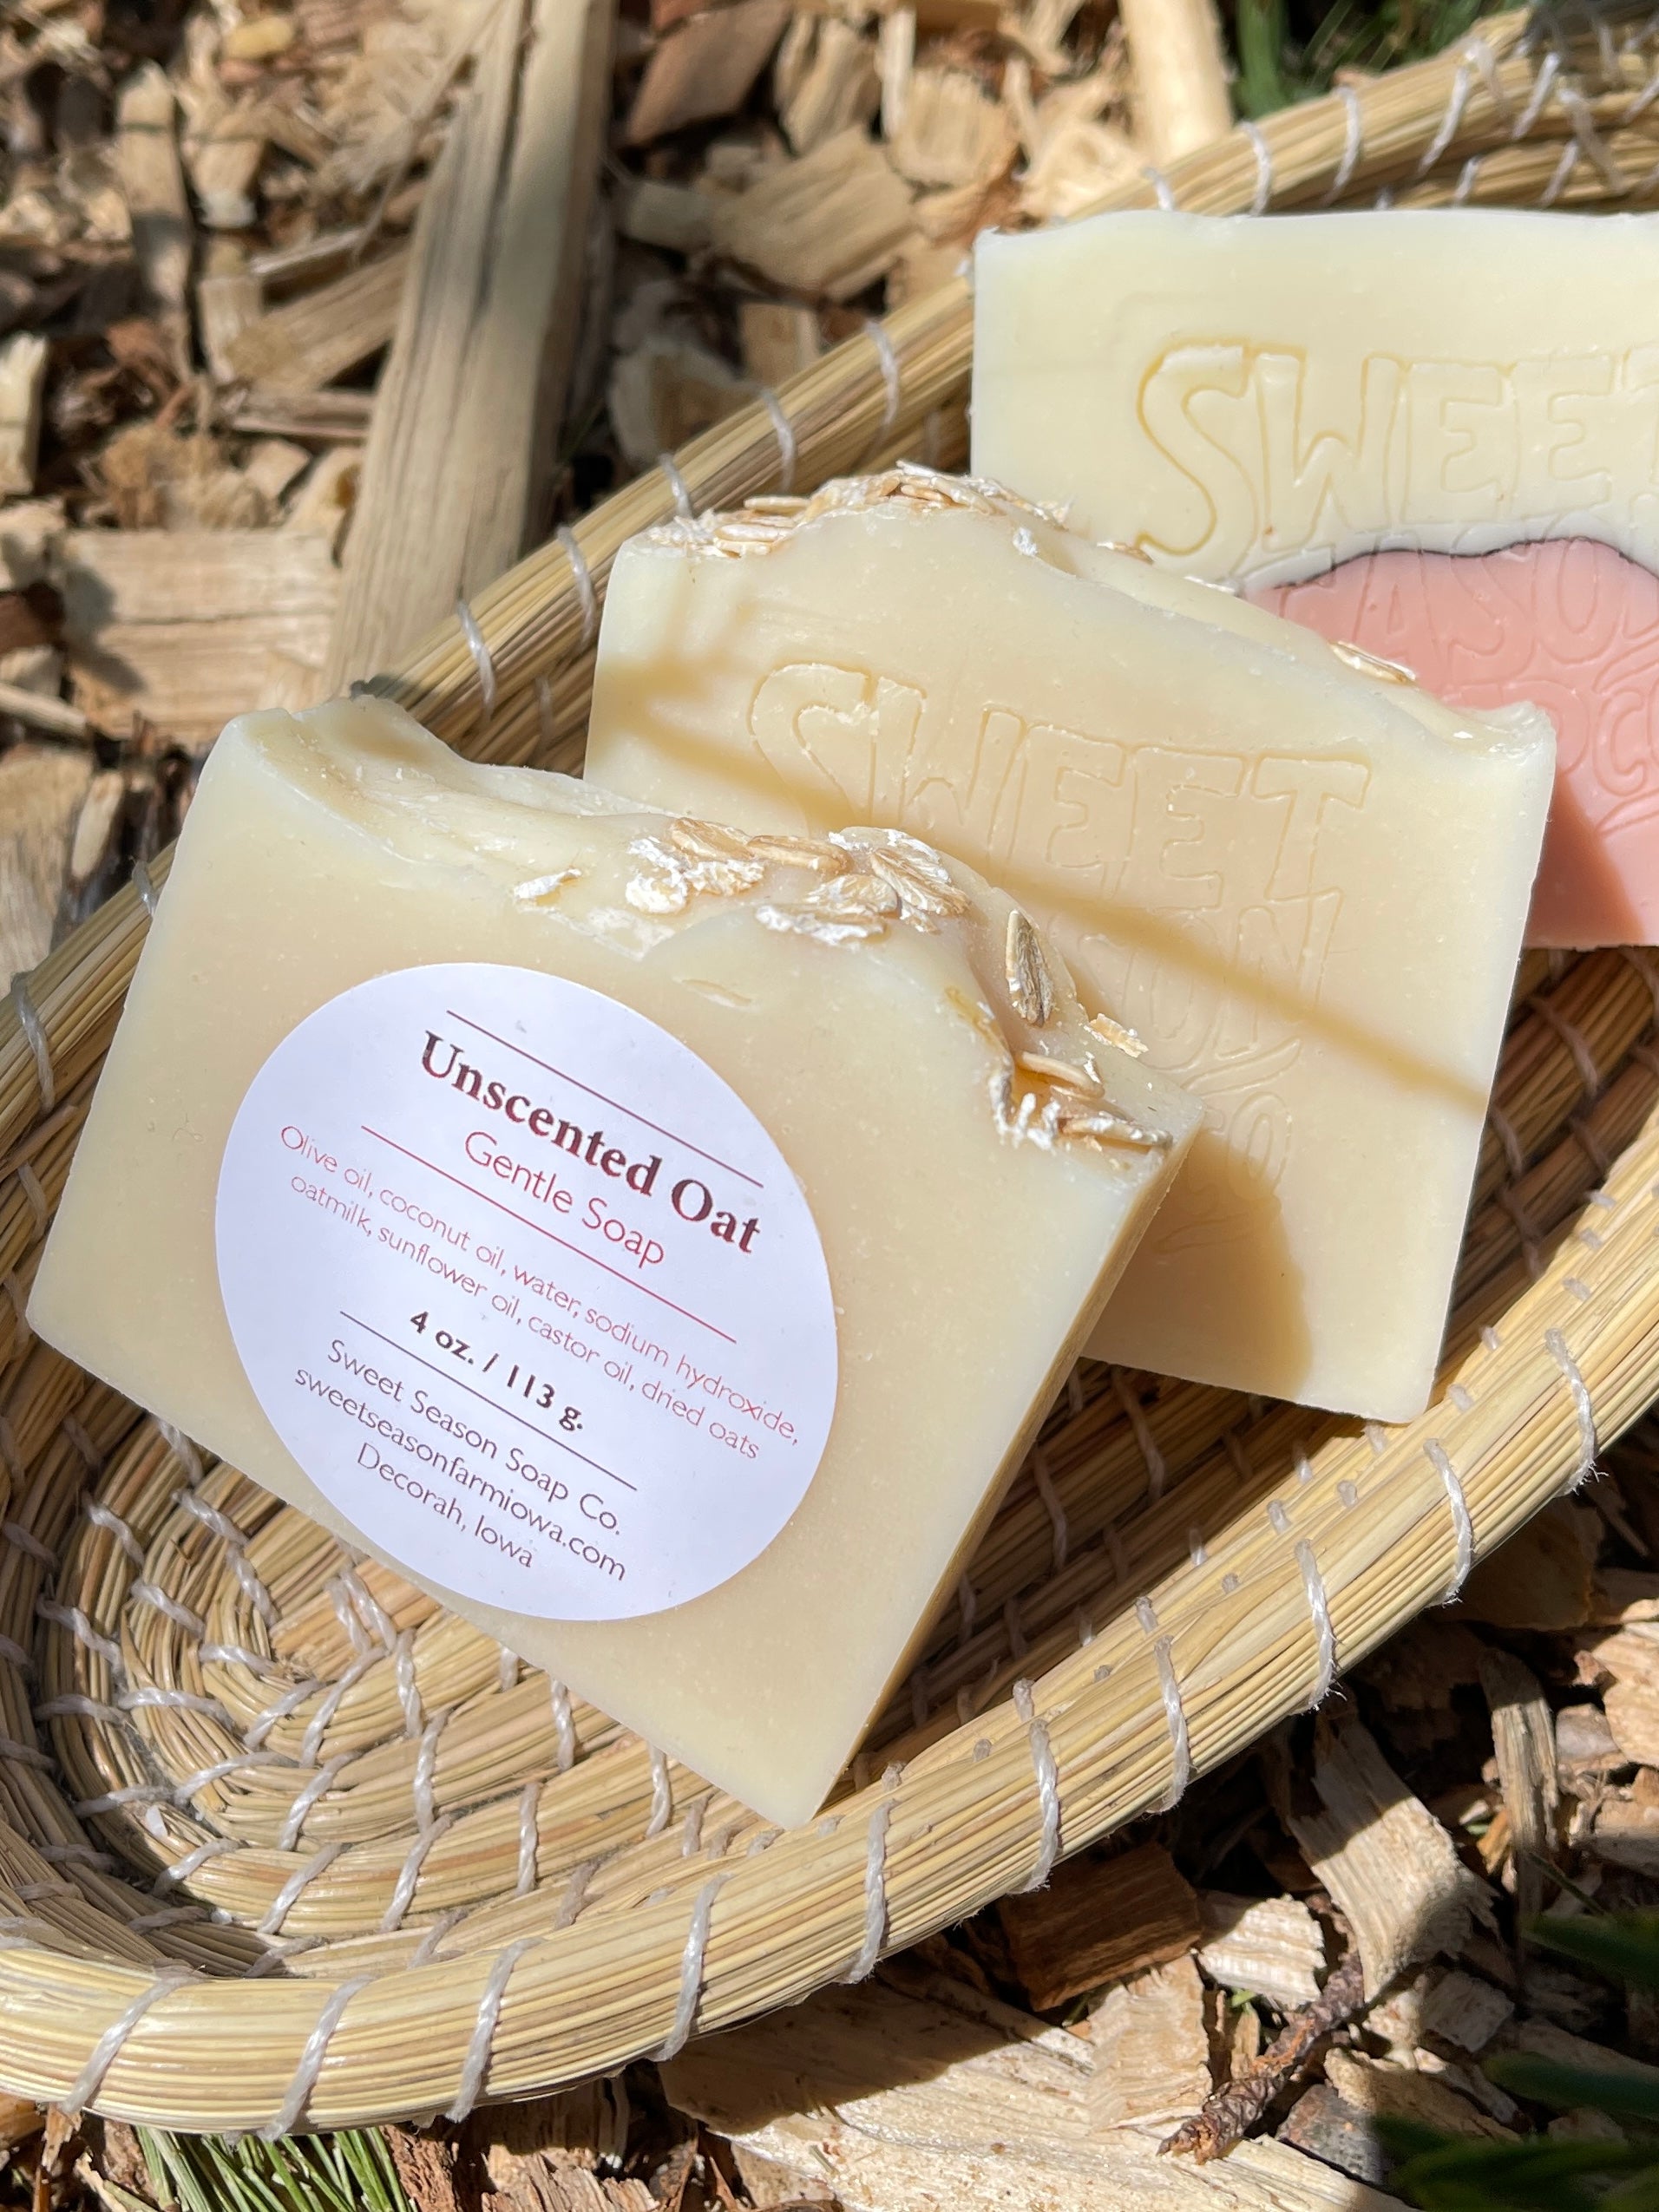 Sweet Season Farm - Natural Soap | Unscented Oat